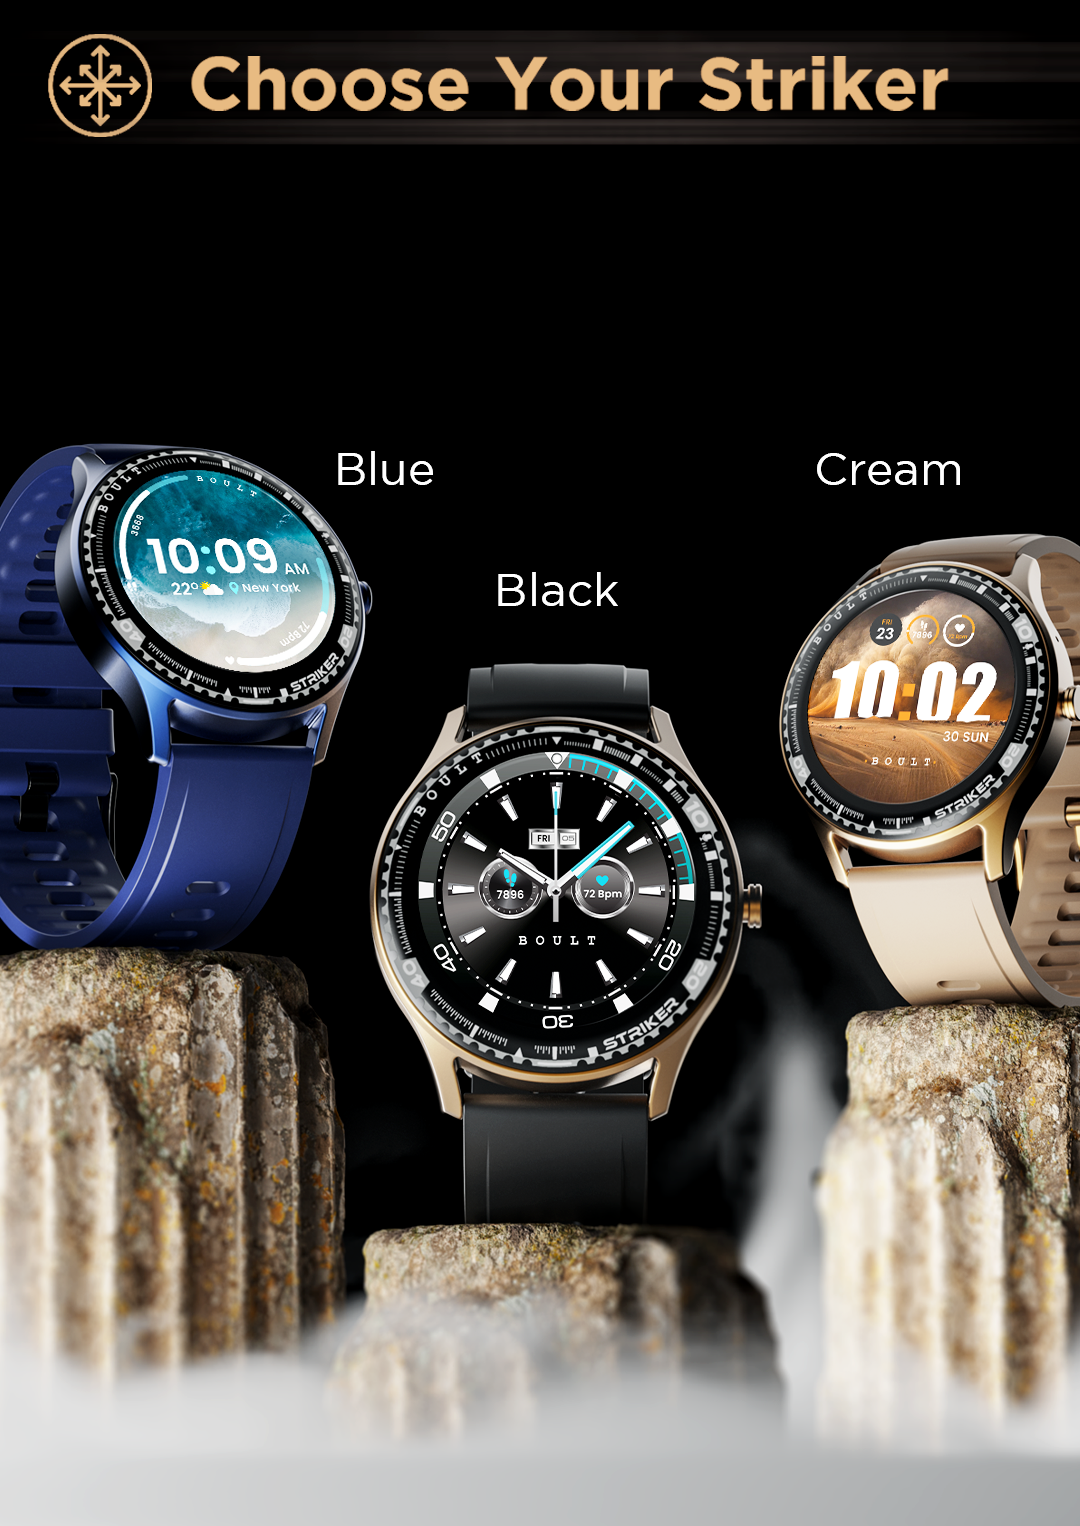 Boult Striker | Smartwatch with Health Monitor & Round Display